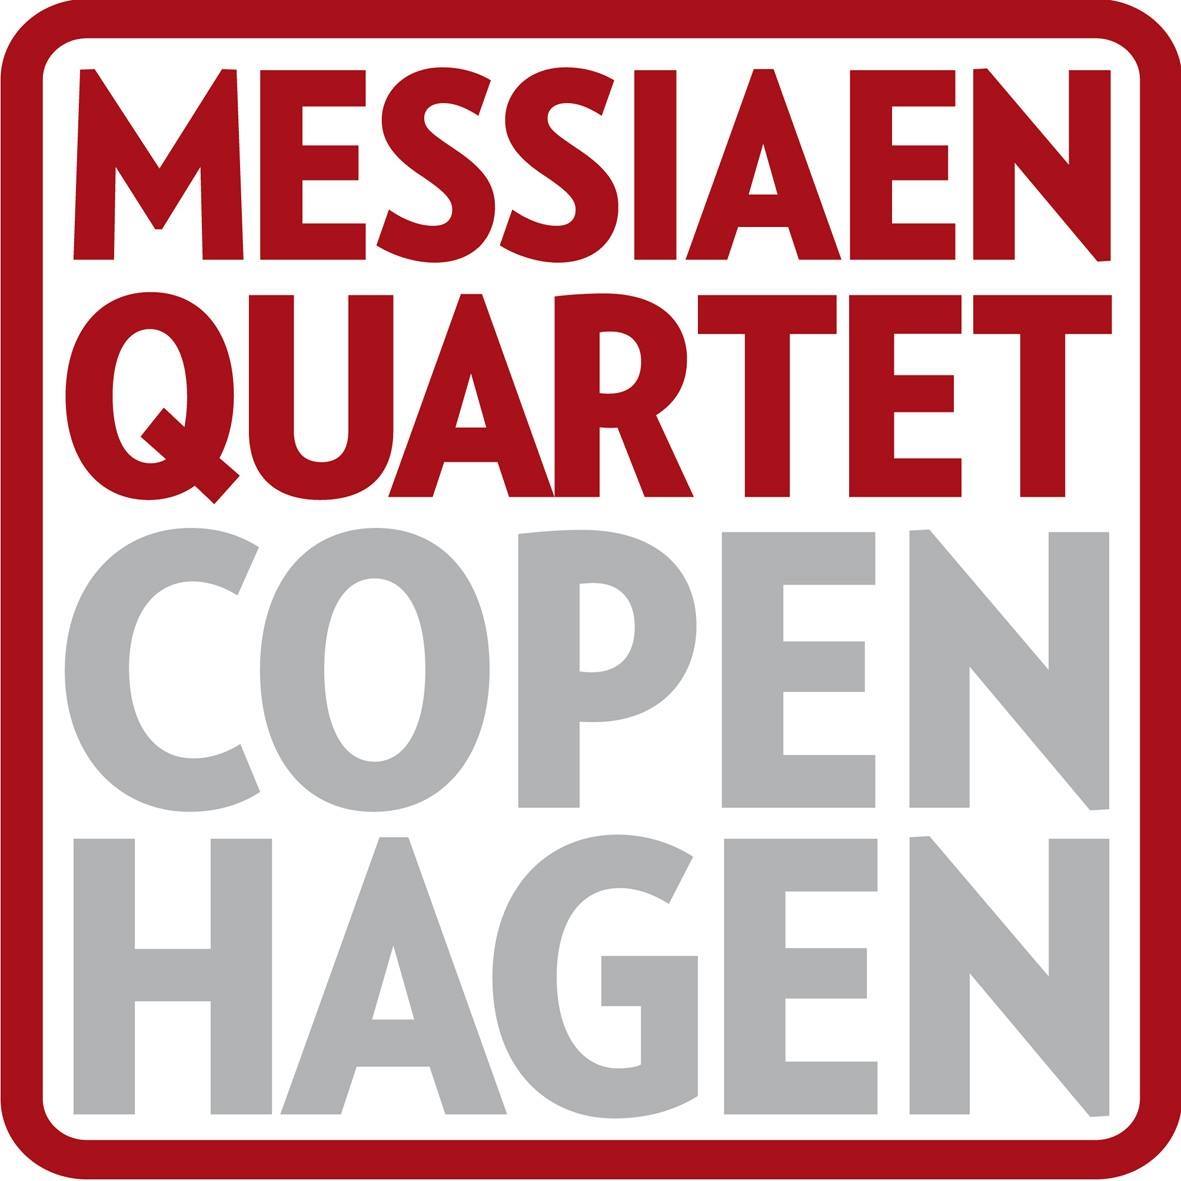 ““Messiaen